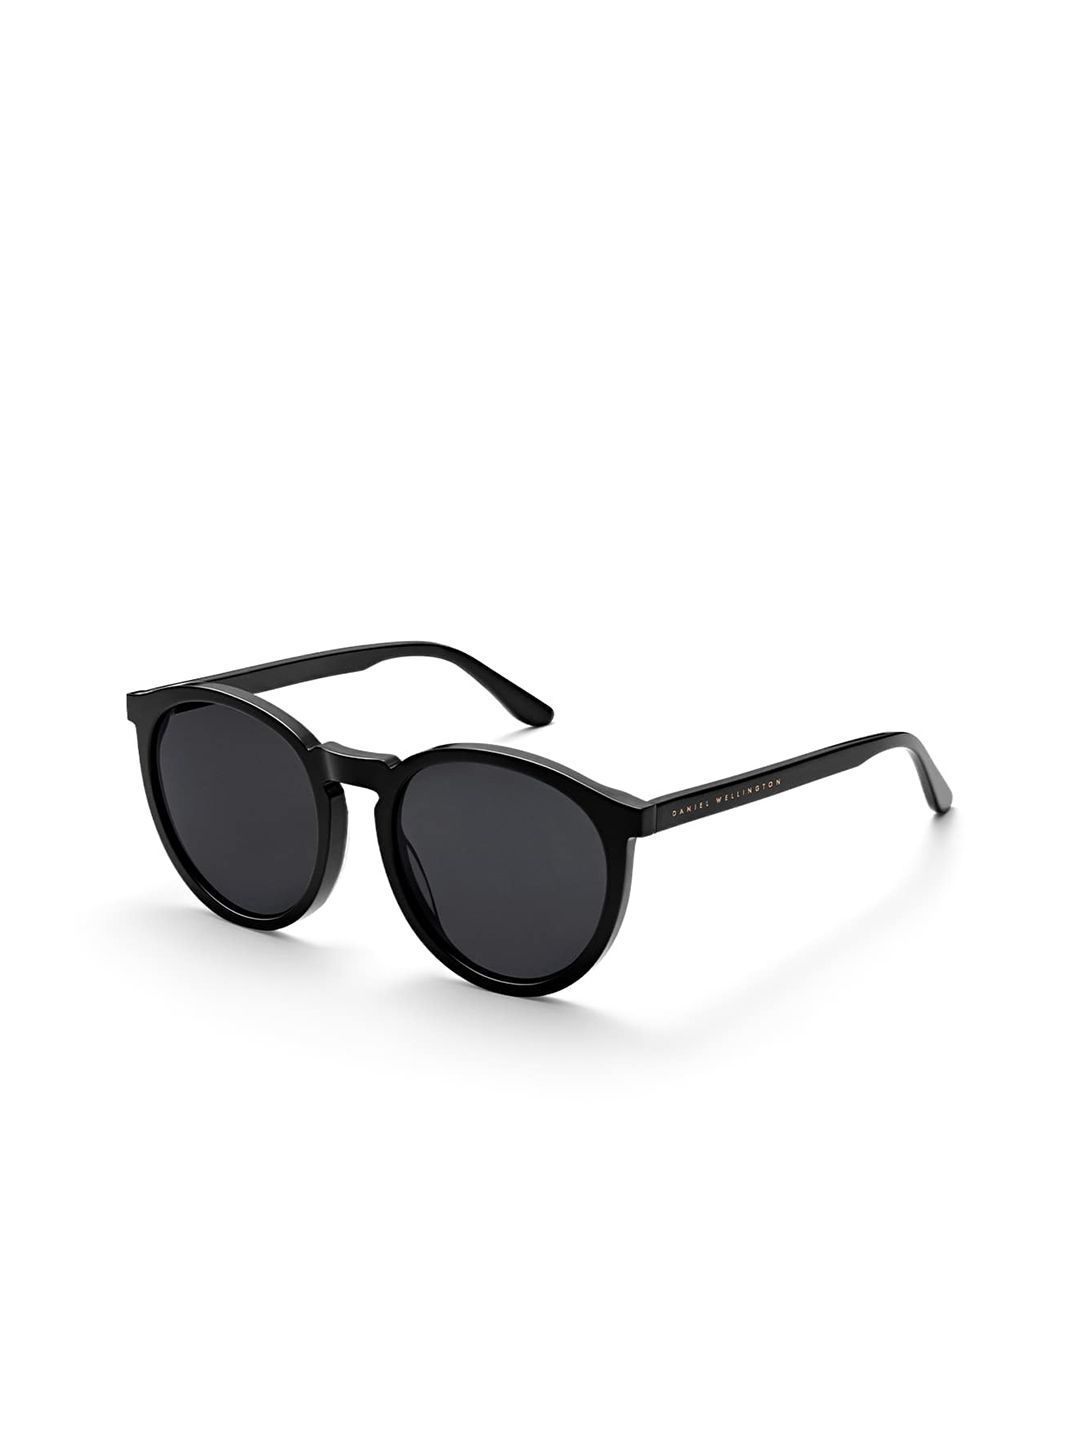 Daniel Wellington Unisex Black Lens & Black Round Sunglasses with UV Protected Lens Price in India